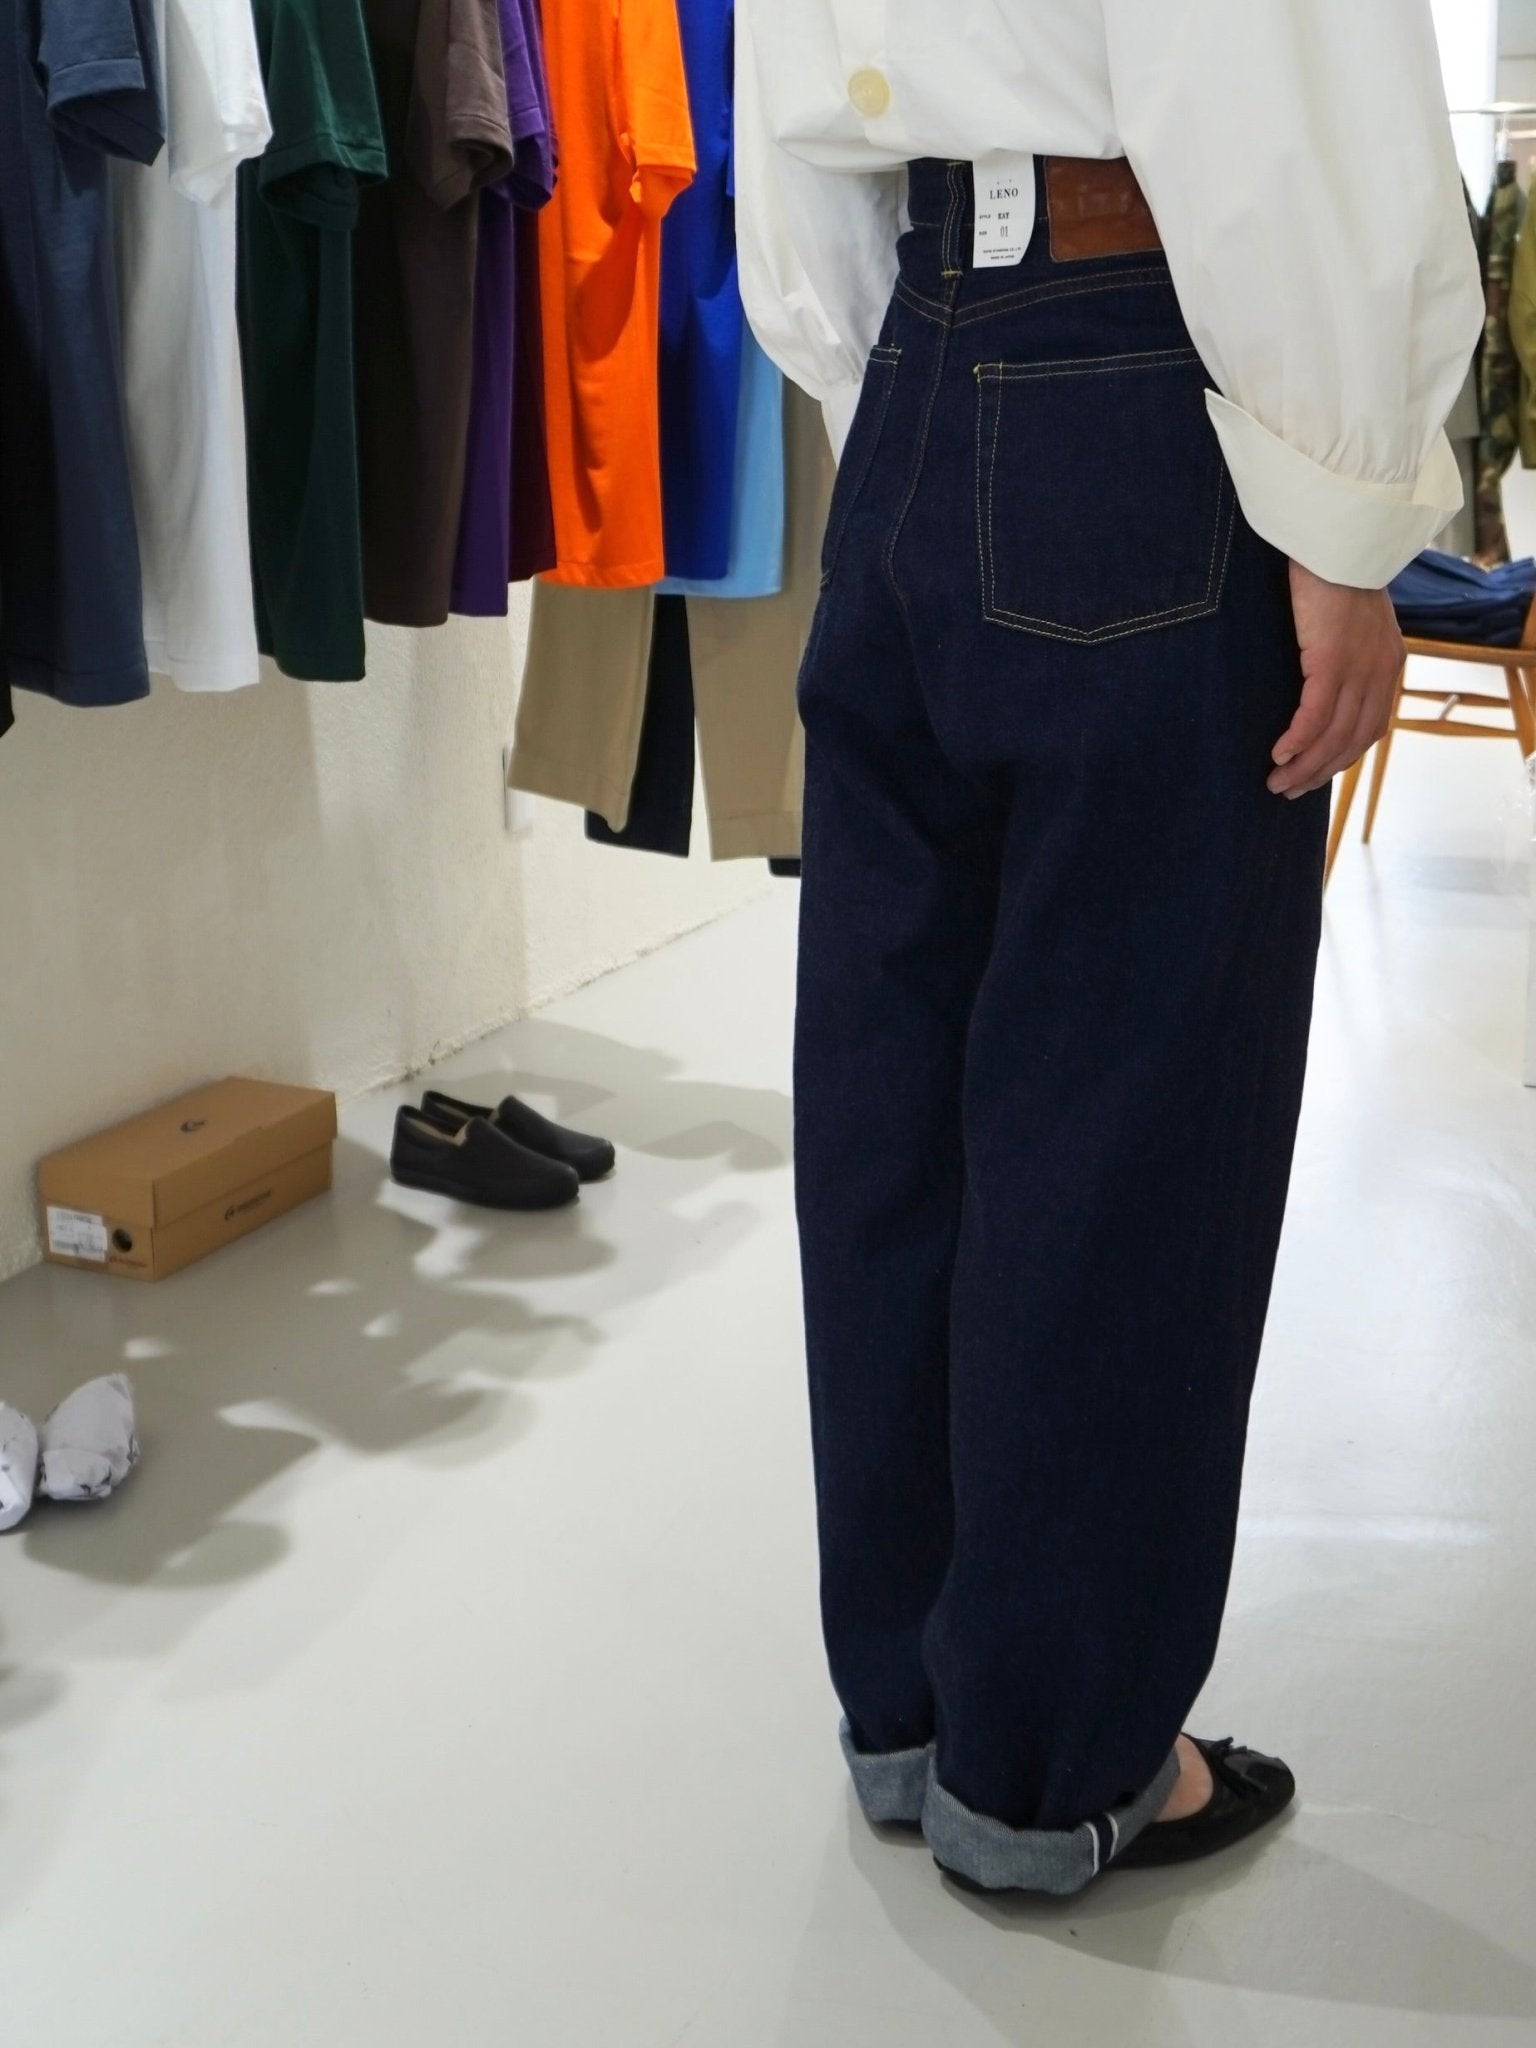 LENO] KAY HIGH WAIST JEANS Reno Kay High Waist Jeans Made in Japan ...